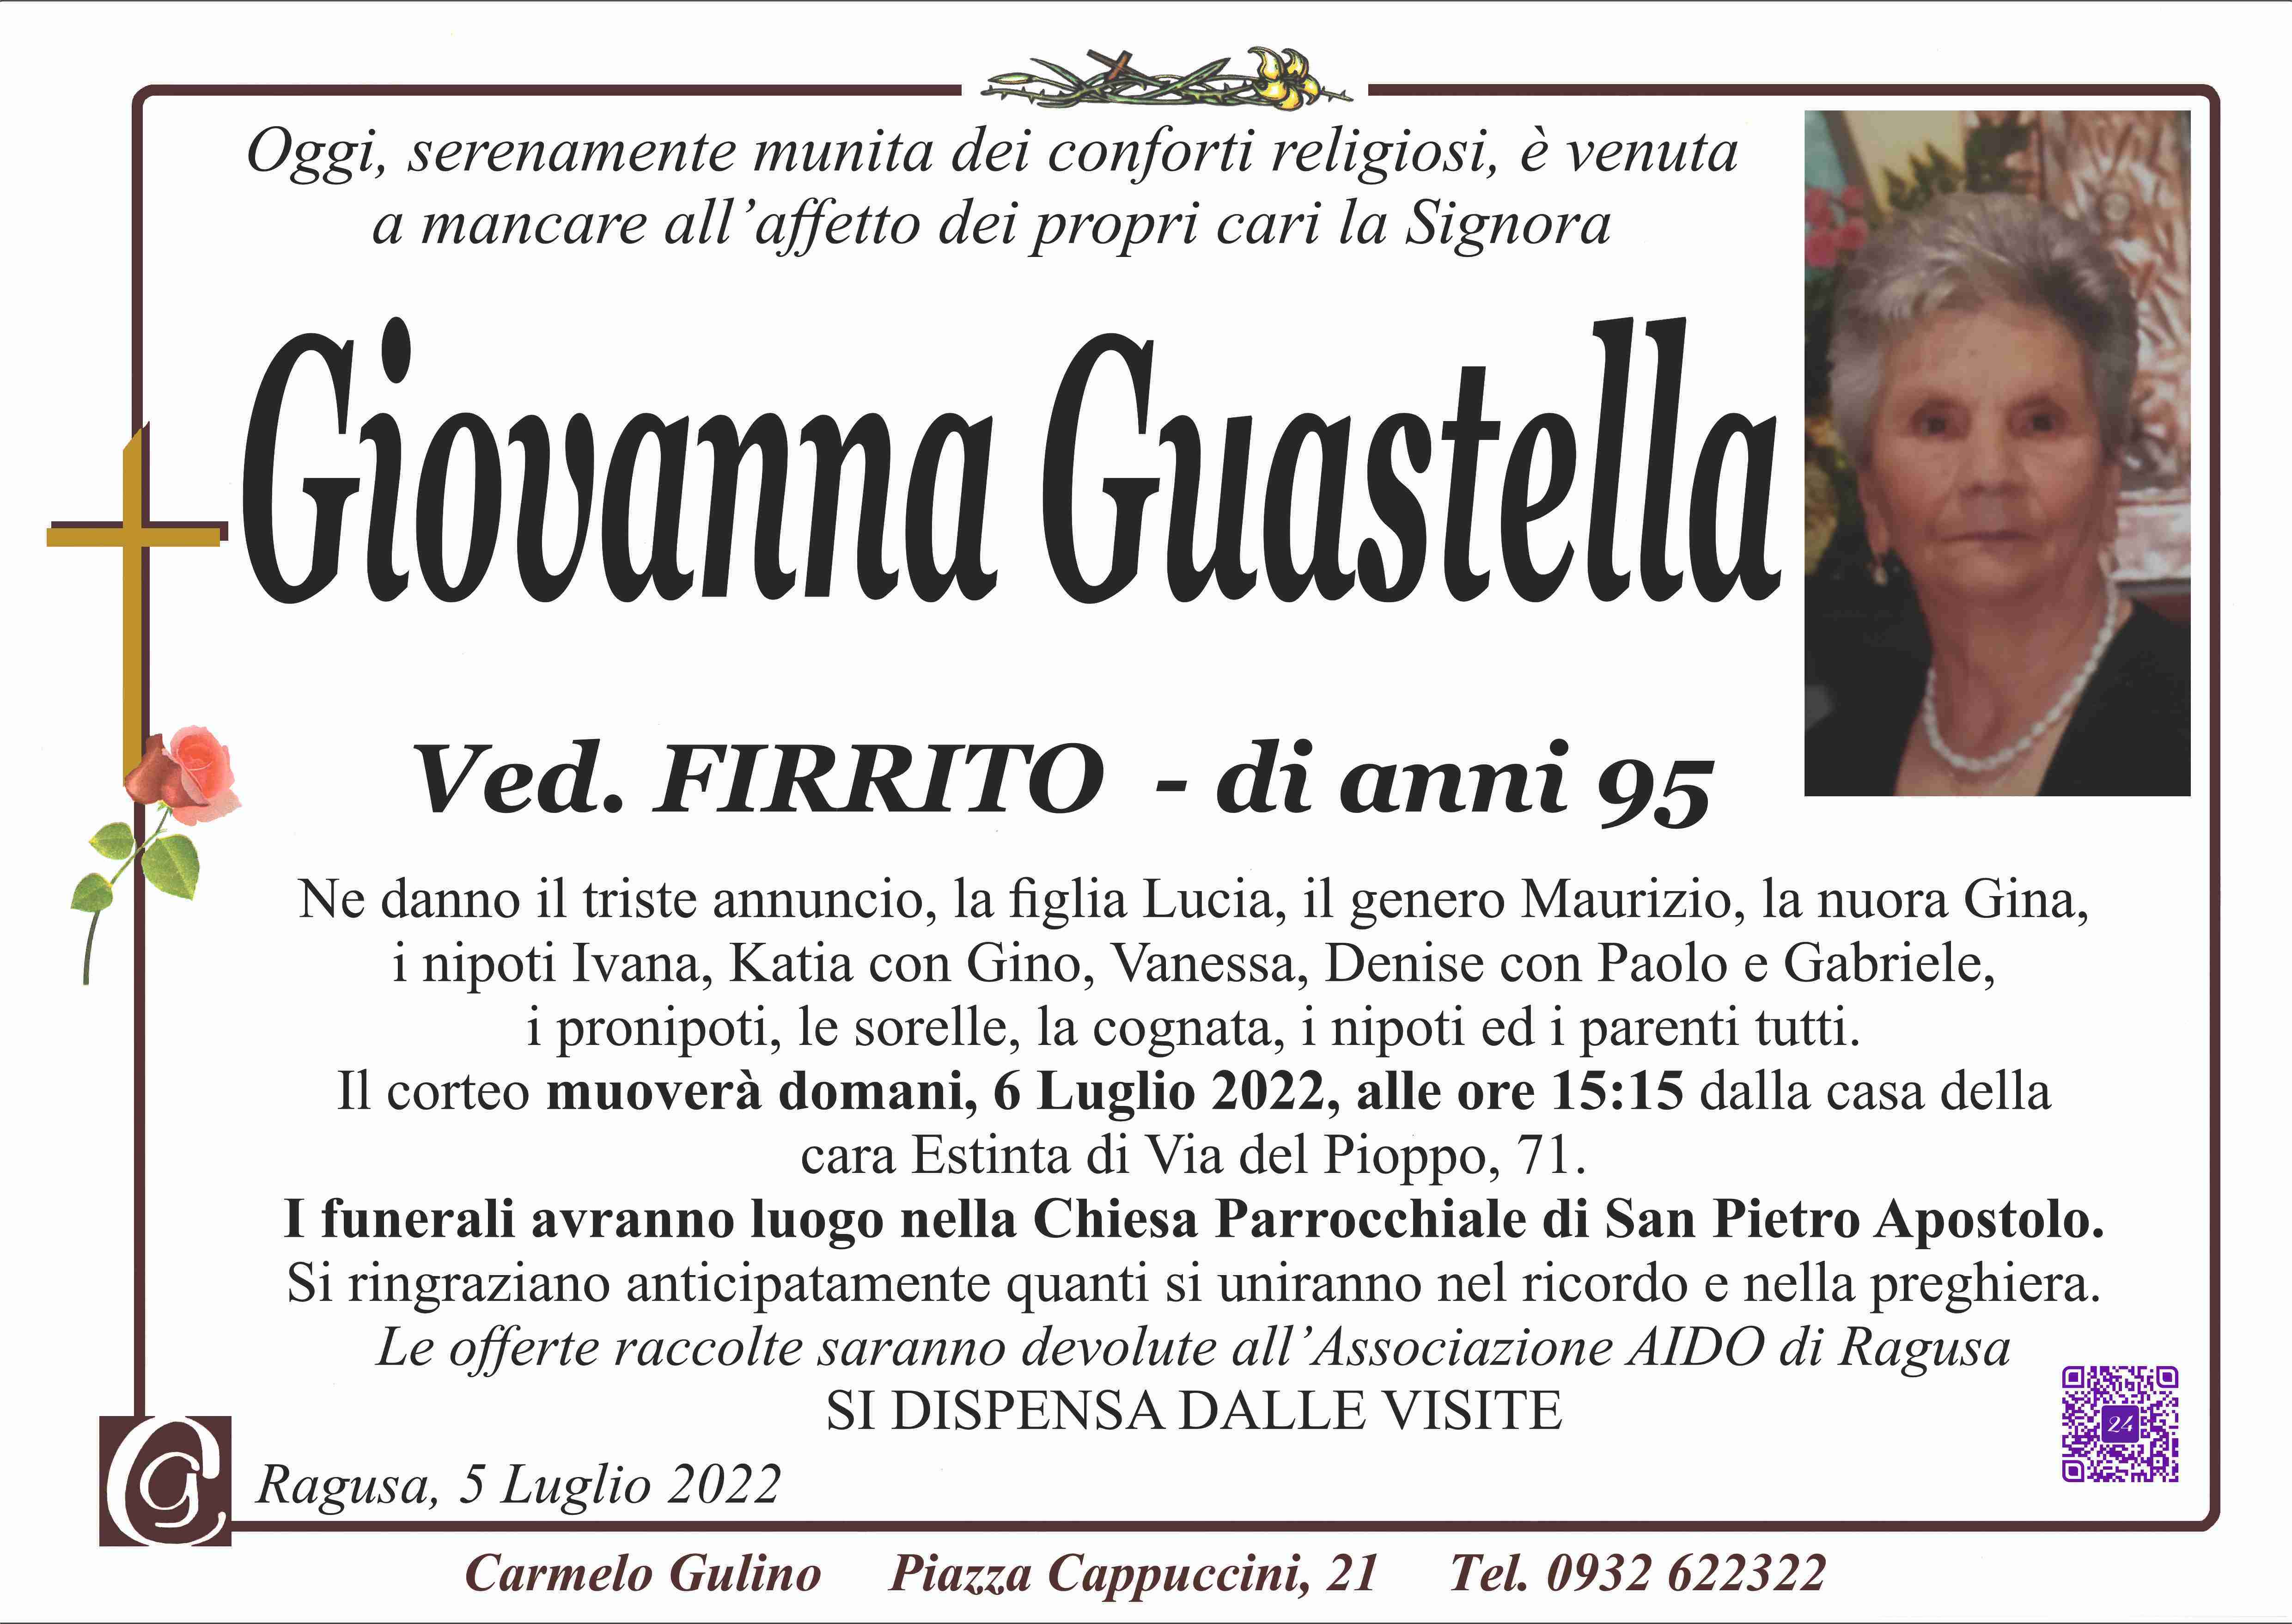 Giovanna Guastella